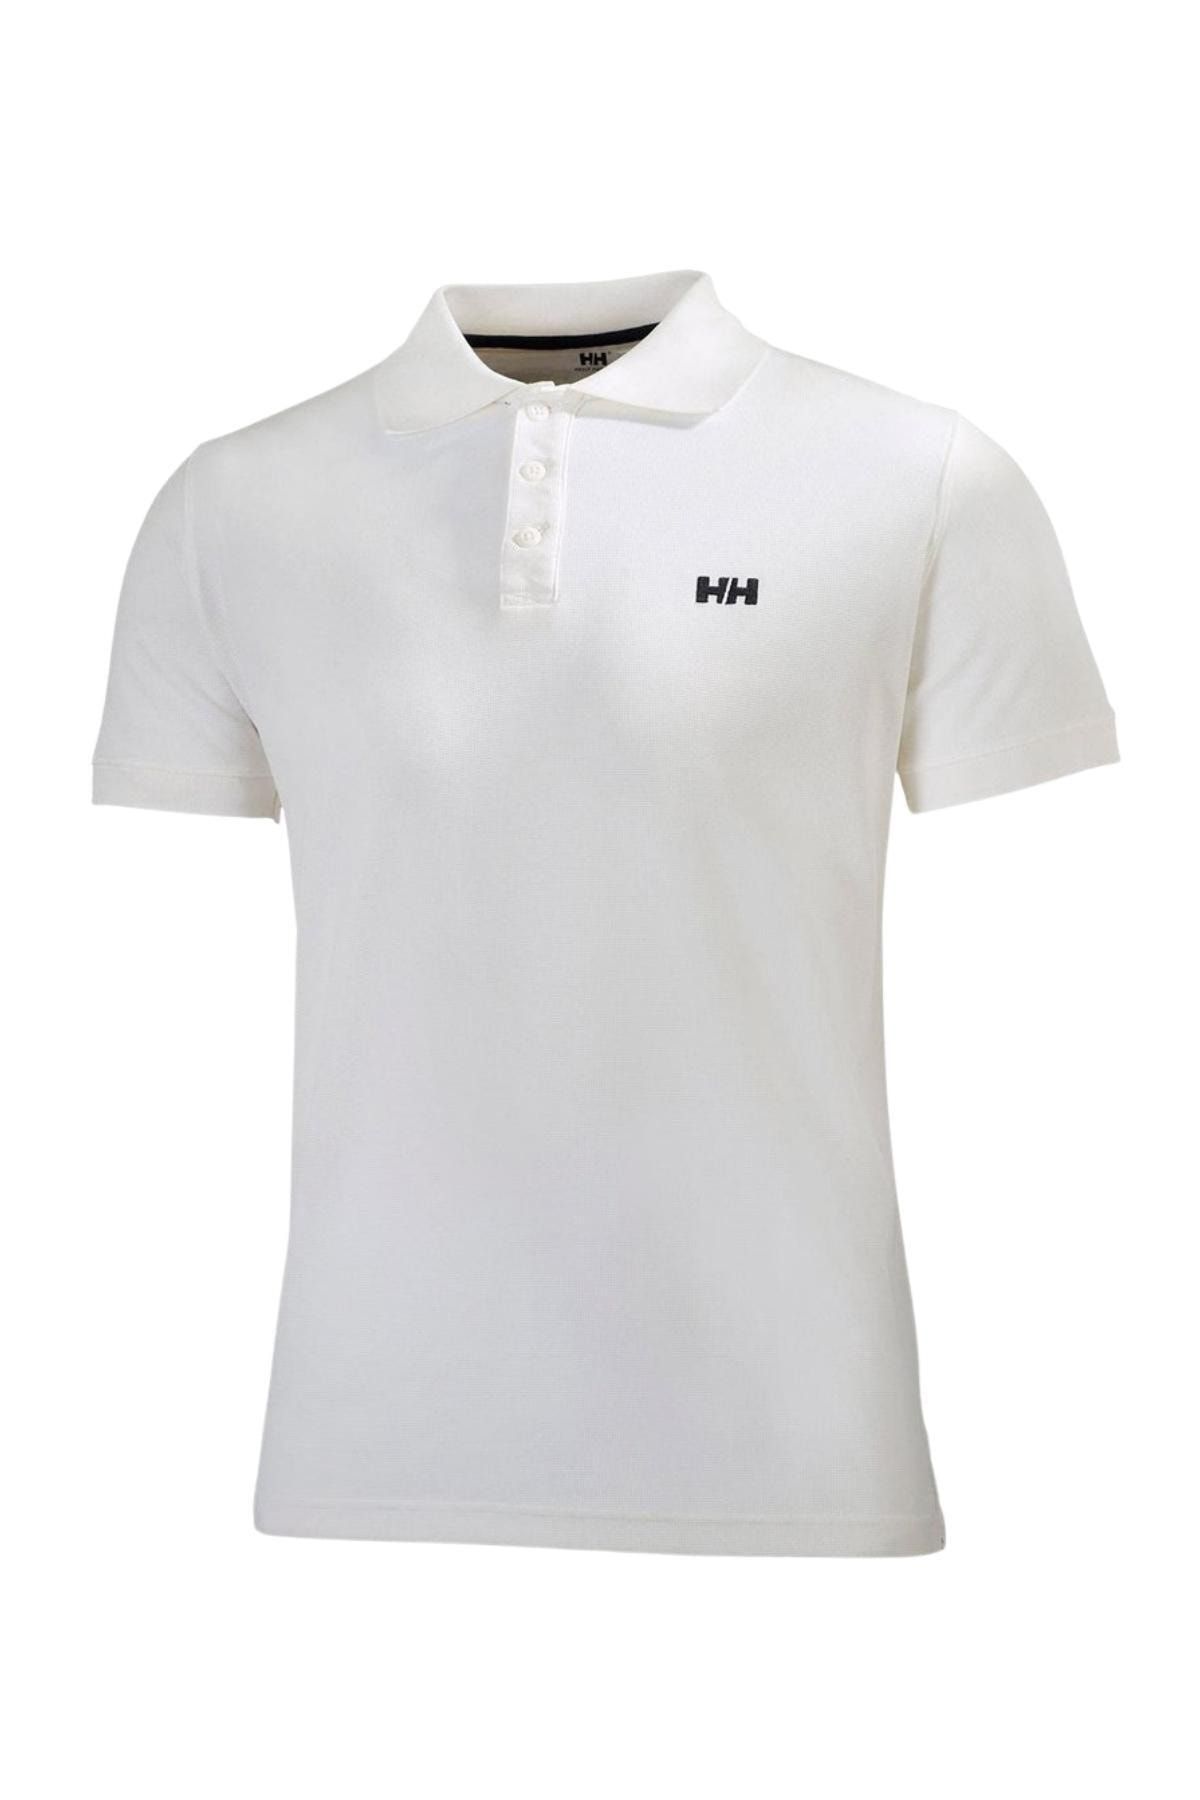 Helly Hansen Hha.50584 - Driftedline Polo T-shirt